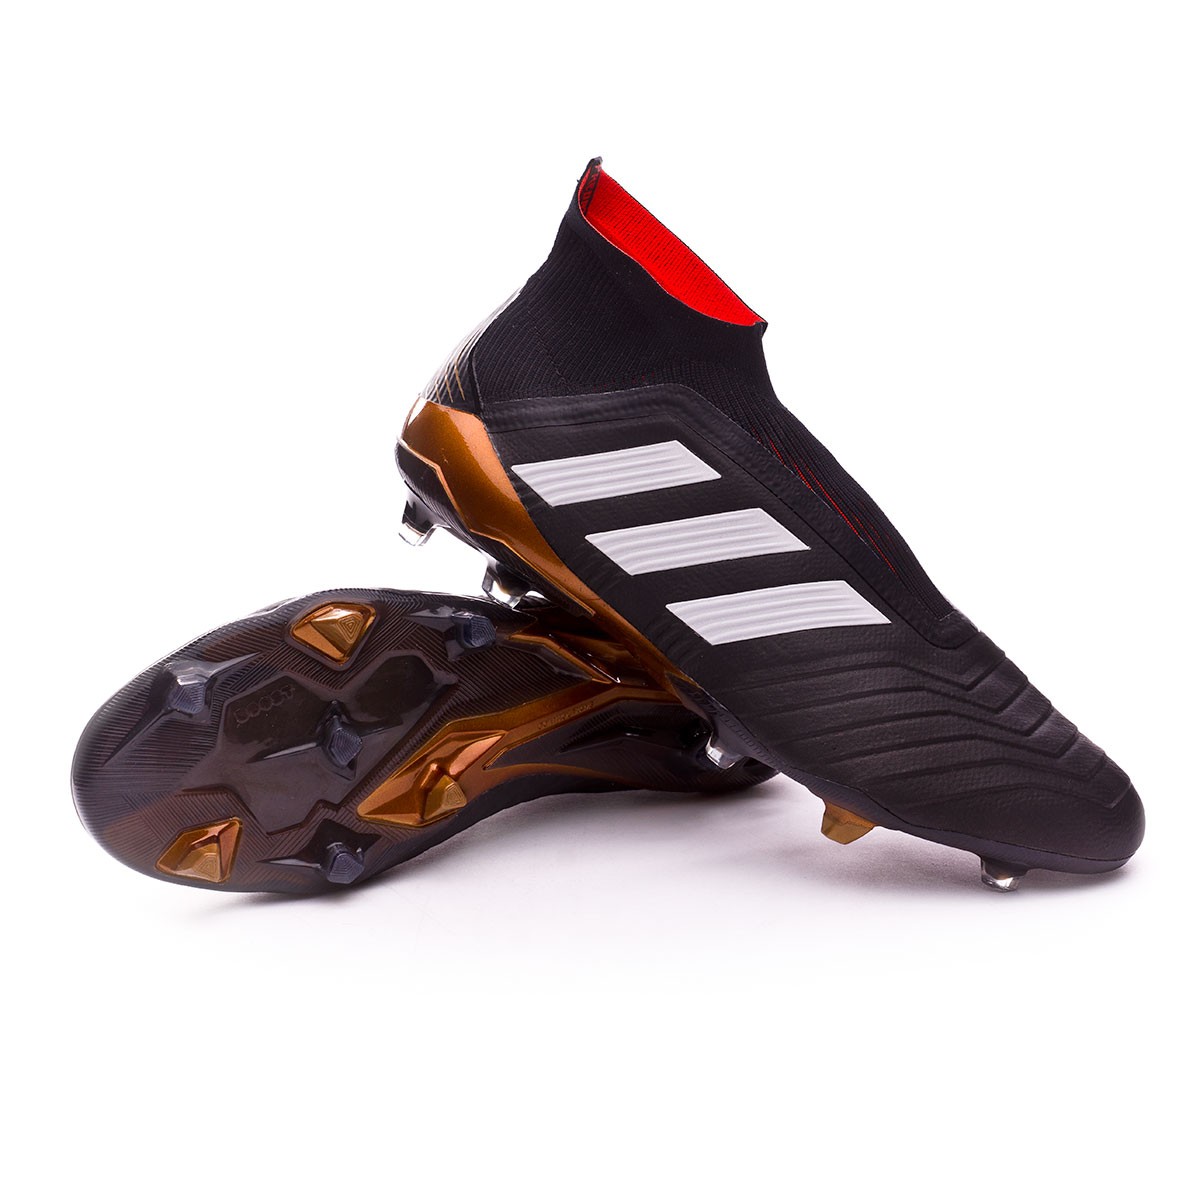 kmart soccer boots